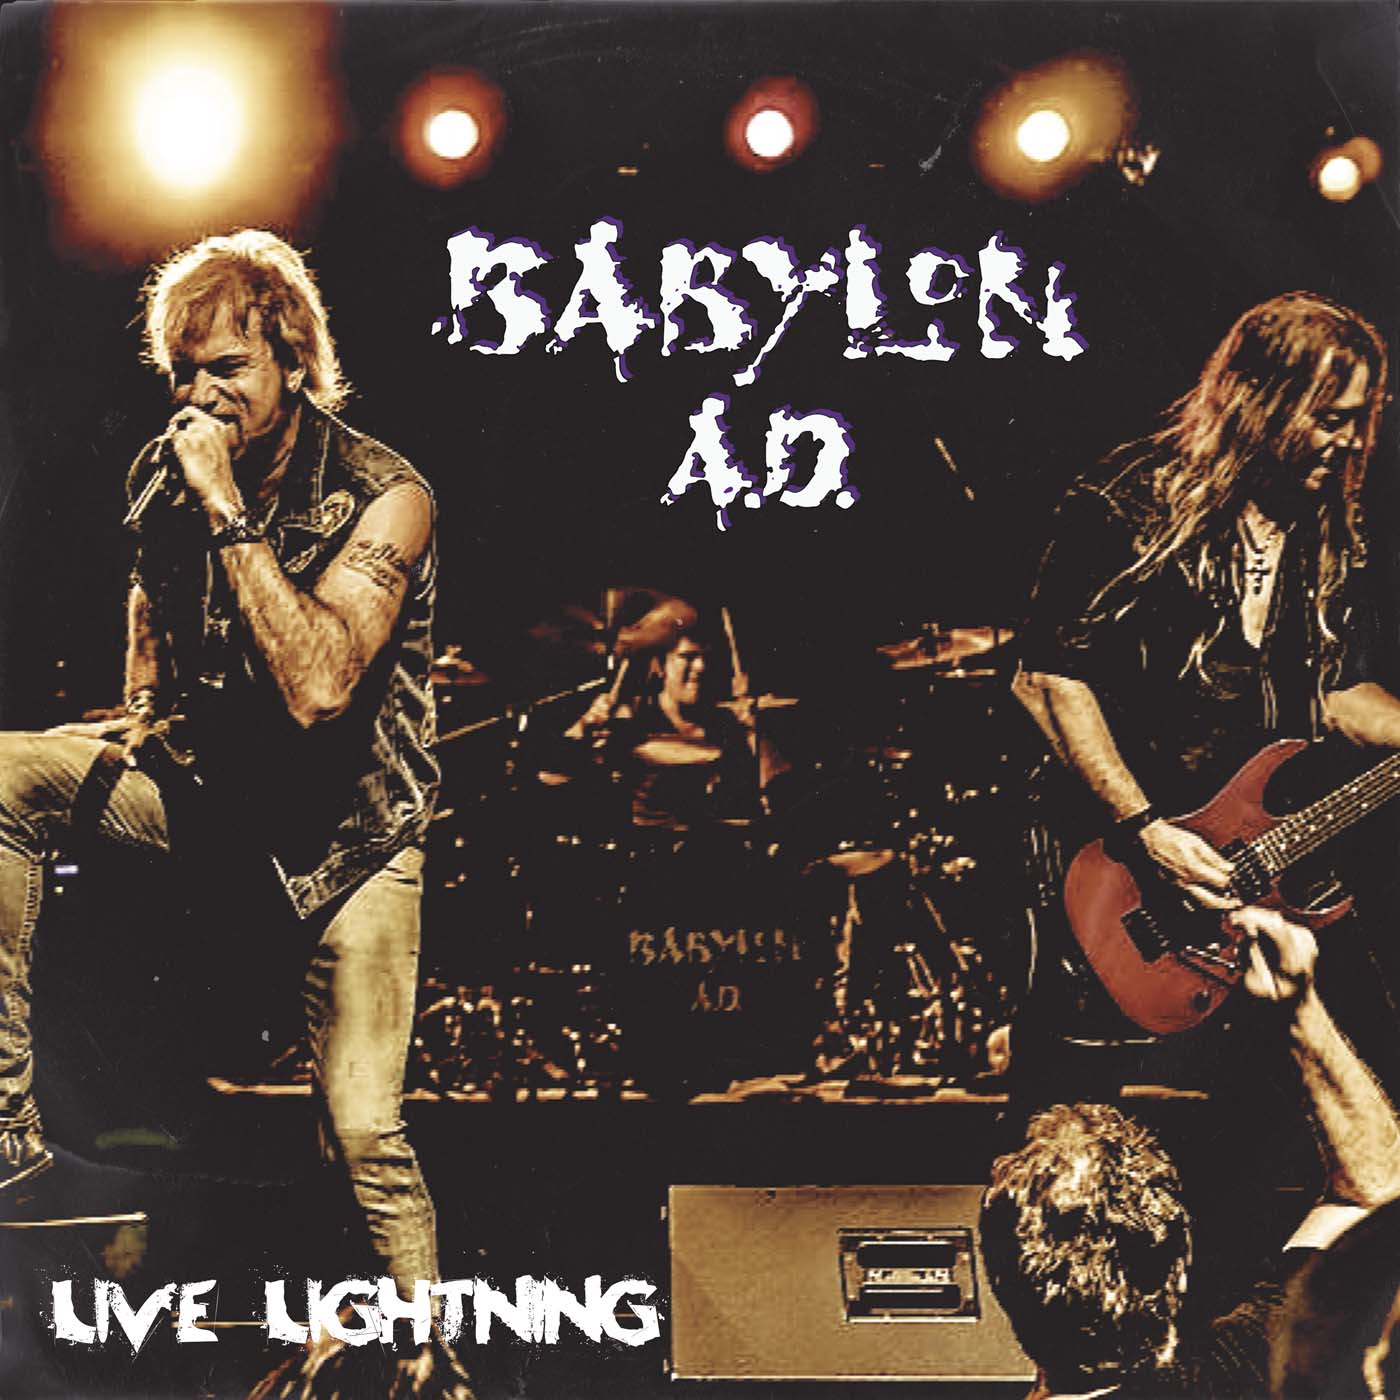 Babylon A.D. "Live Lightning"